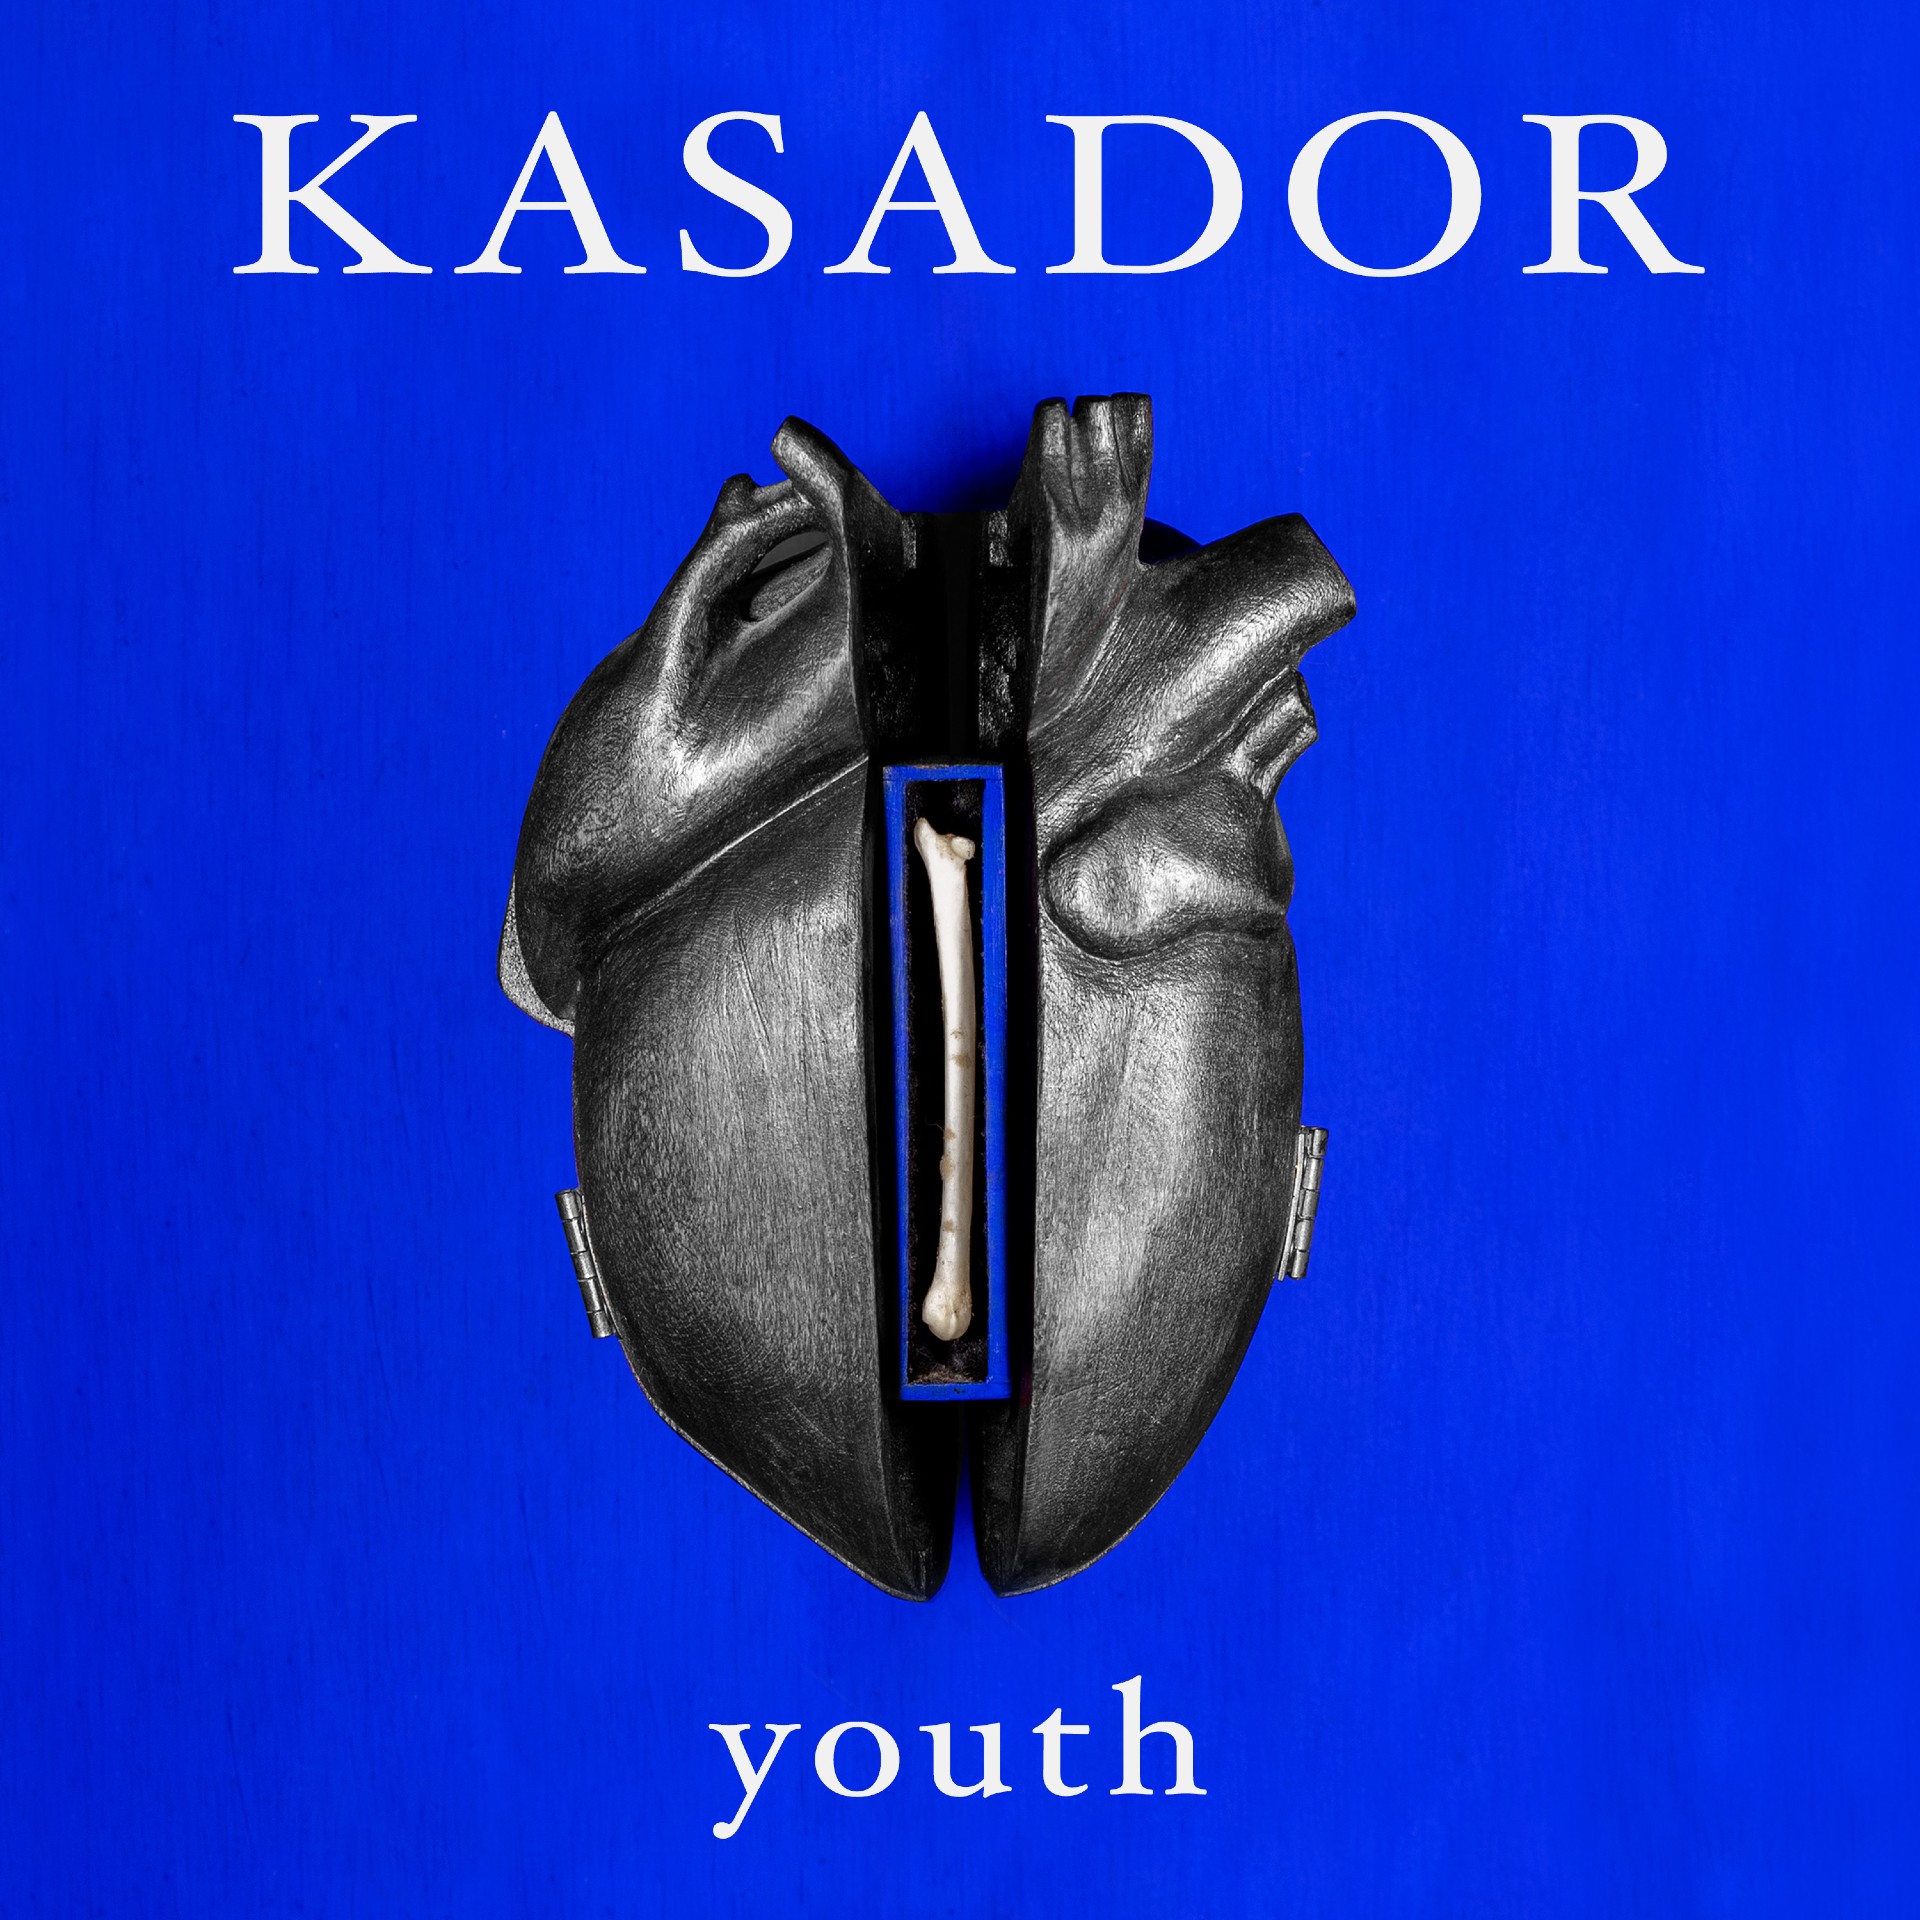 Kasador “Youth” single artwork